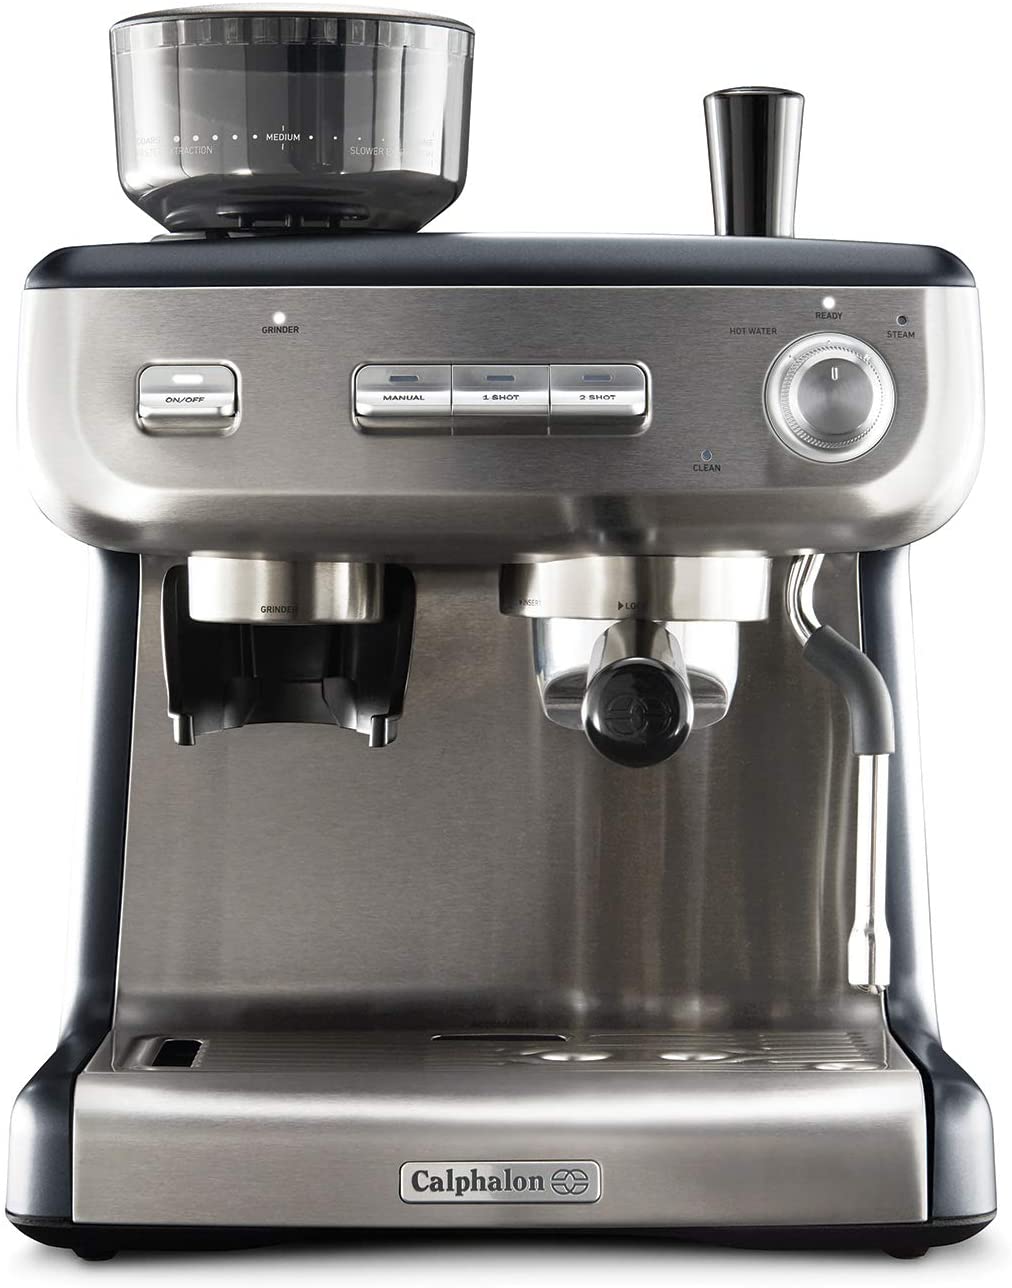 Calphalon Temp IQ Espresso Machine with Grinder & Steam Wand Review